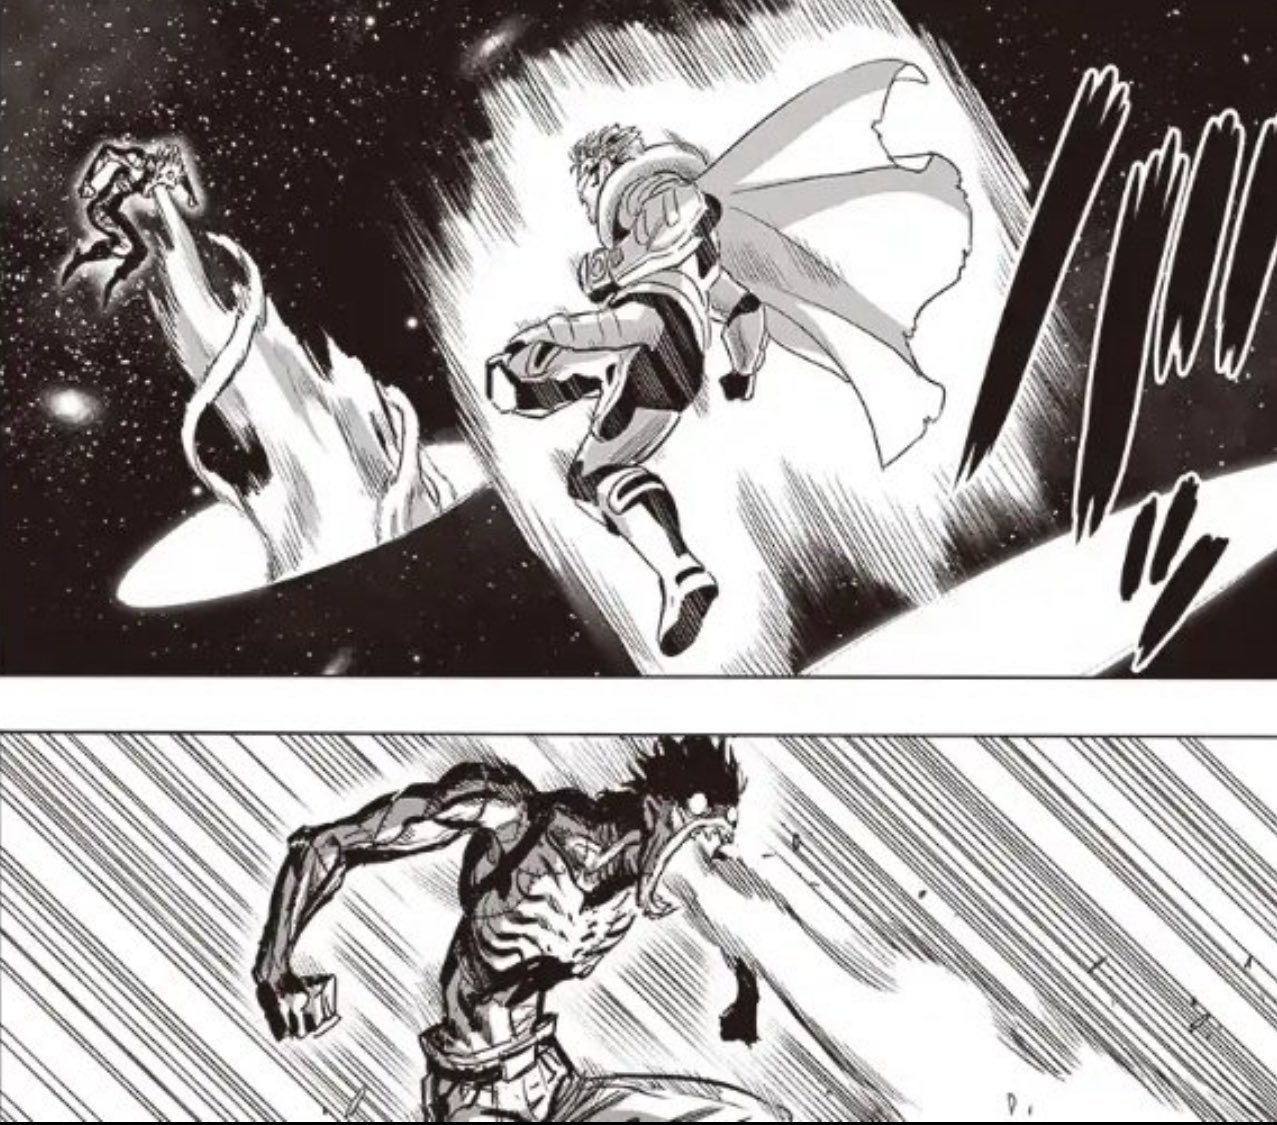 [One Punch Man] Manga capítulo 197/242 redraw GKQFLFzXYAAy3Fe?format=jpg&name=large